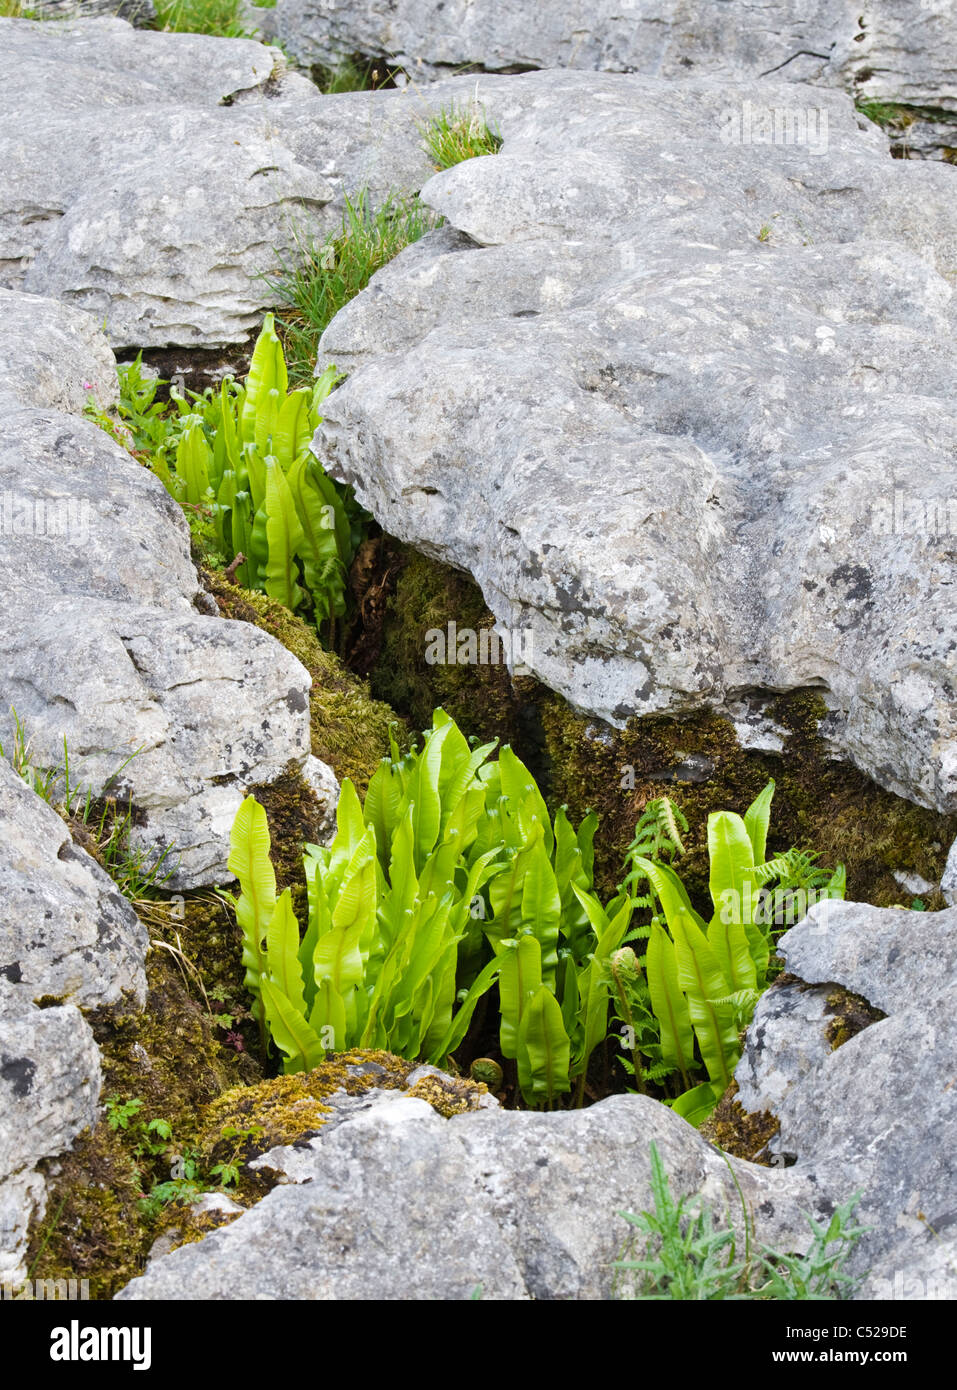 Harts Tongue Fern, Asplenium scolopendrium, growing in limestone pavement, Yorkshire, UK Stock Photo